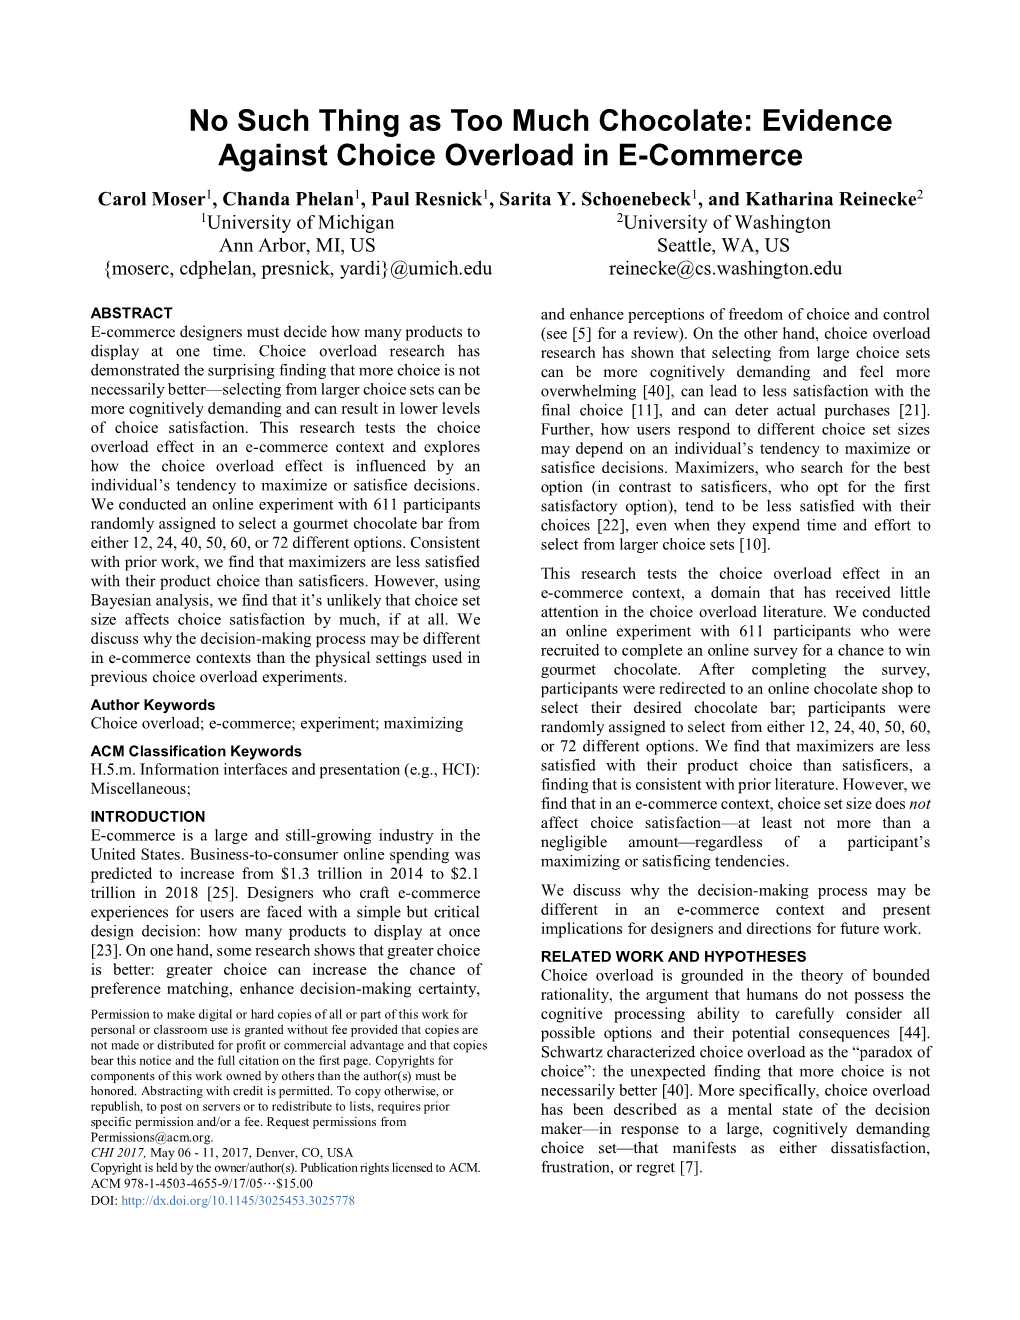 Evidence Against Choice Overload in E-Commerce Carol Moser1, Chanda Phelan1, Paul Resnick1, Sarita Y